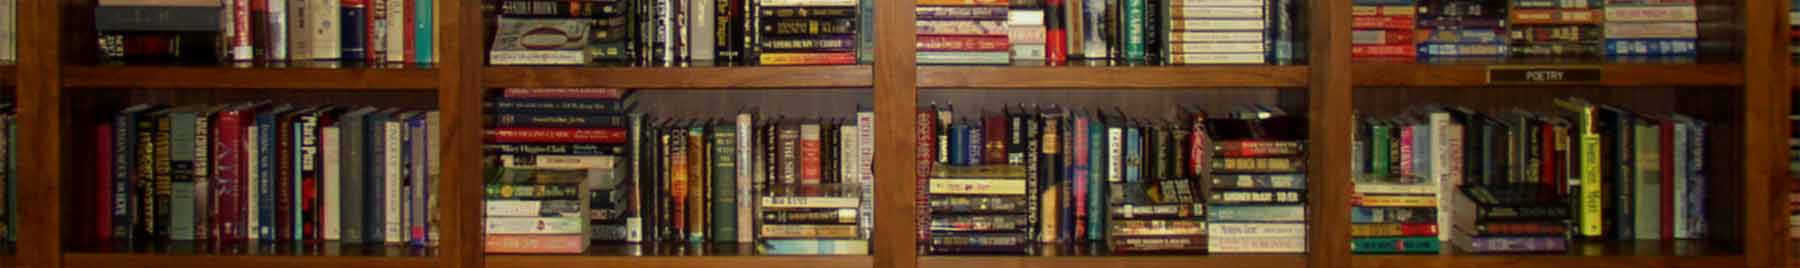 book shelf stuffed with books